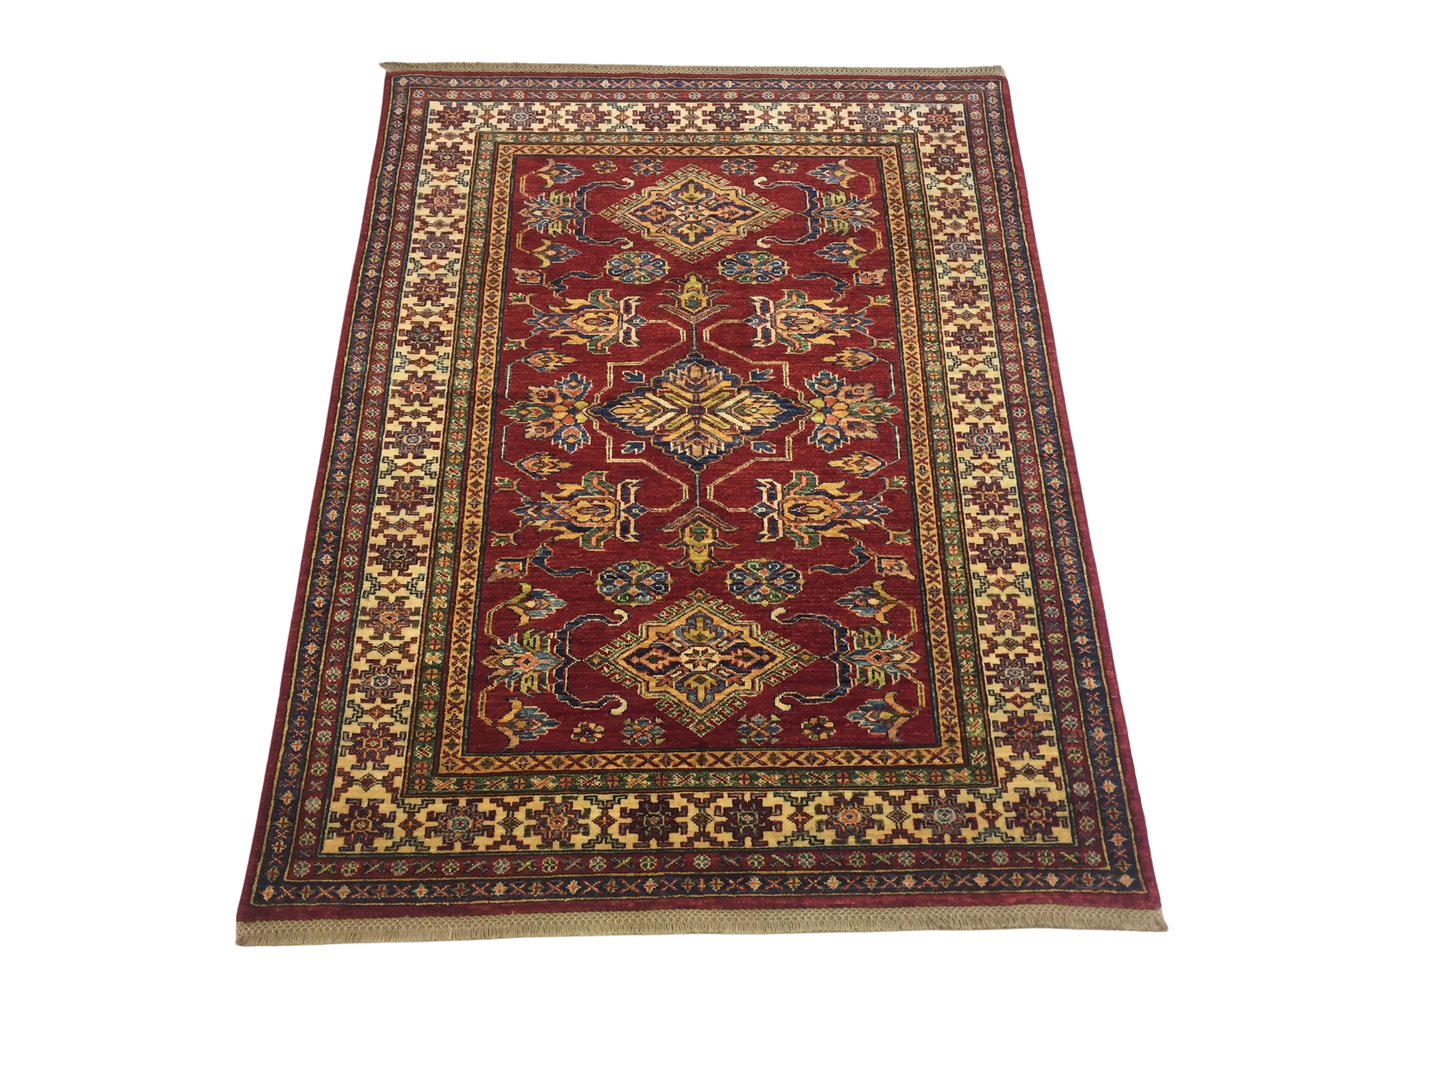 Şirvan Bicolor Carpet 172 X 127 cm - Alfombras de Estambul -  Turkish Carpets - Alfombras de Estambul